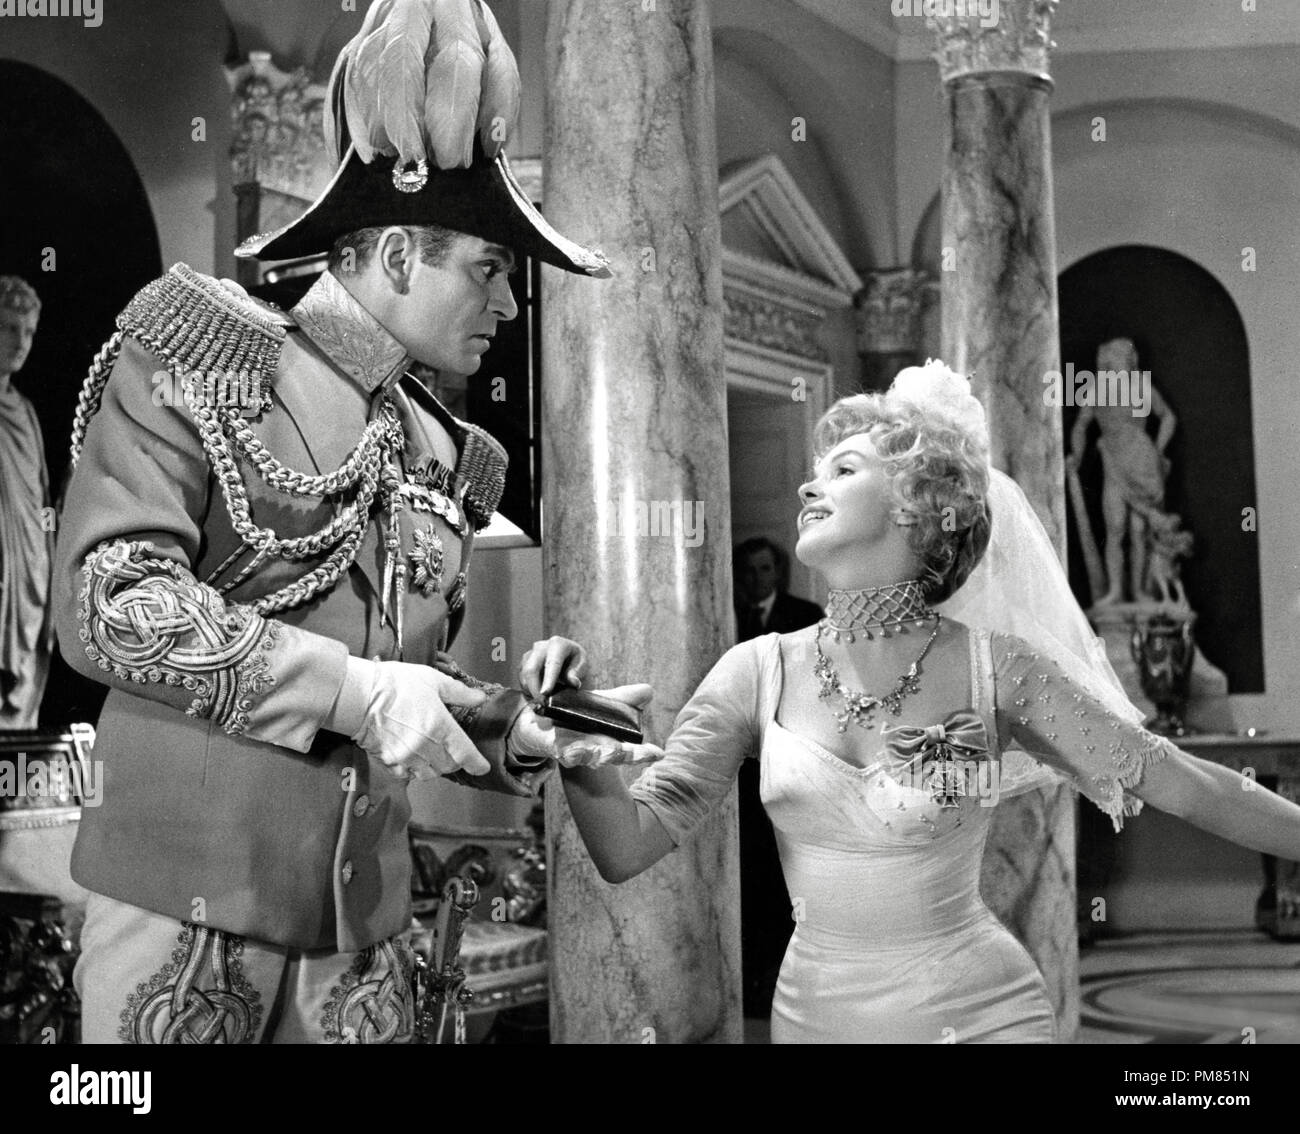 (Archivage classique du cinéma - Marilyn Monroe rétrospective) 'The Prince and the Showgirl' Laurence Olivier, Marilyn Monroe 1957 Warner Cinema Publishers Collection de référence de dossier 31479 065THA Banque D'Images